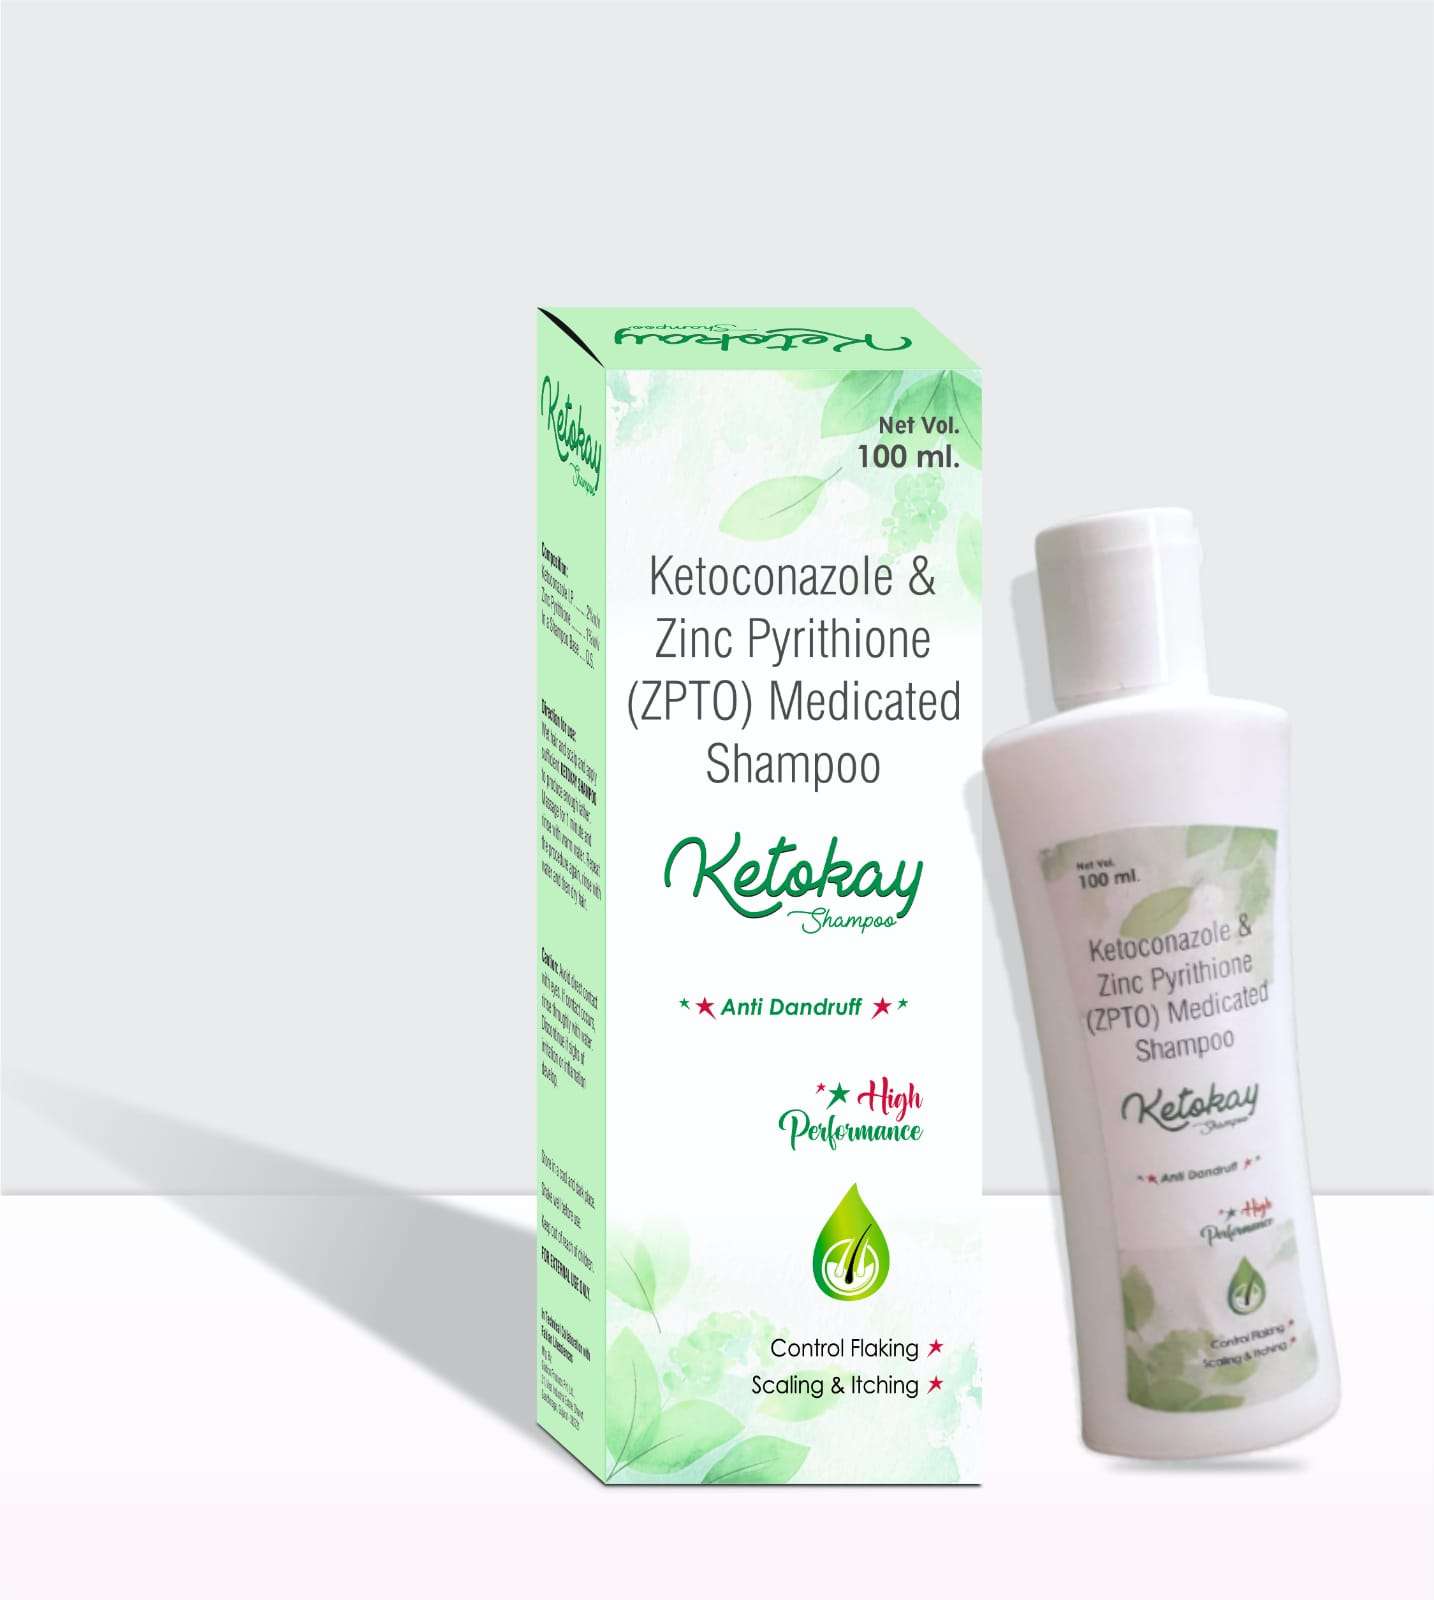 ketoconazole 2% w/v + zinc pyrithione 1% w/v
shampoo base